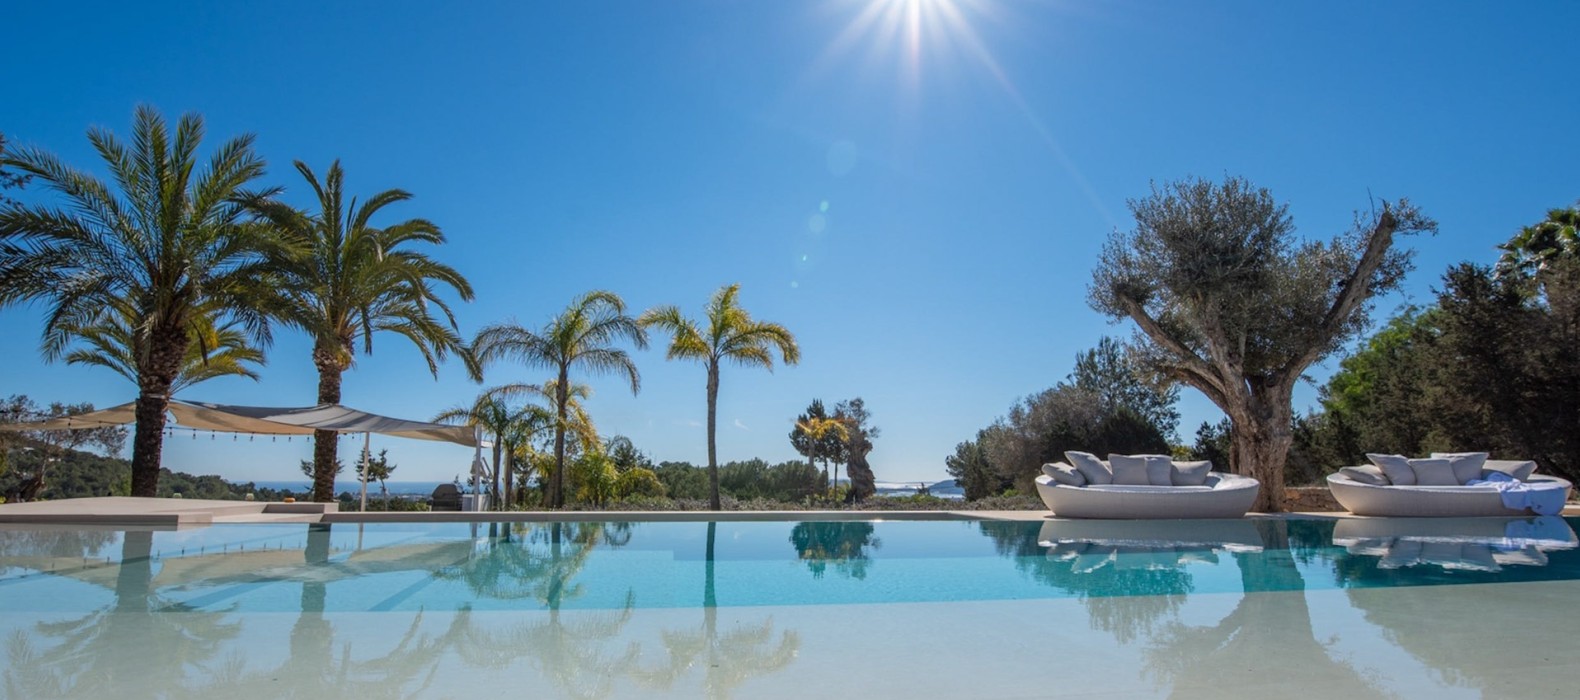 Exterior pool of Villa Liama in Ibiza